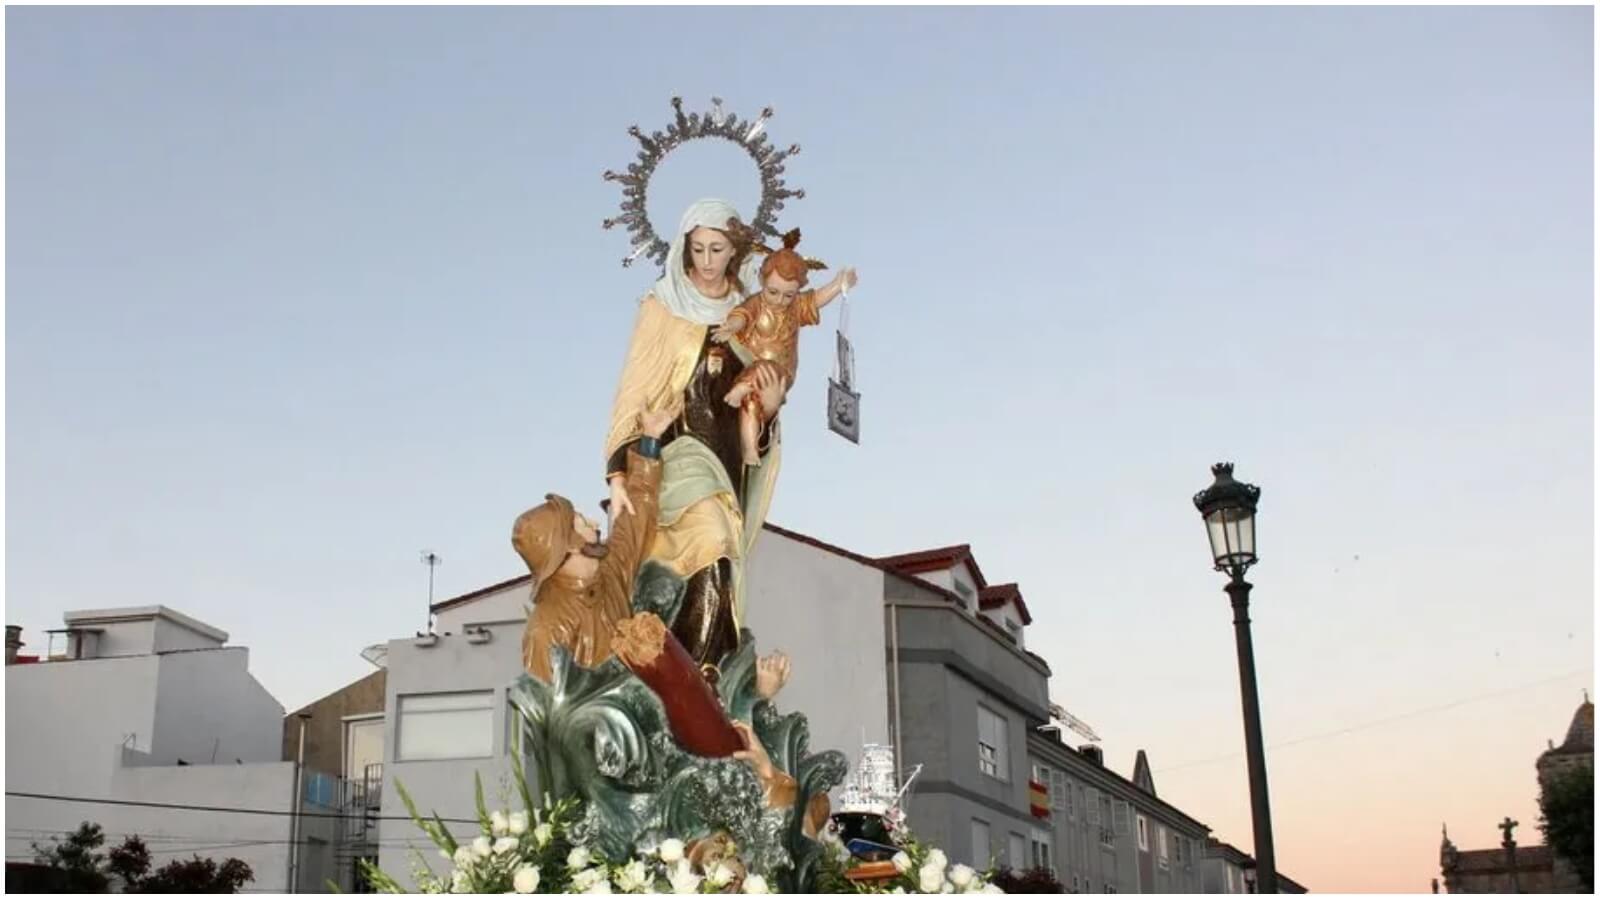 7 Most Popular Festivals in Baiona, Galicia, Spain - 2. Fiesta de la Virgen del Carmen (Festival of the Virgin of Carmen)